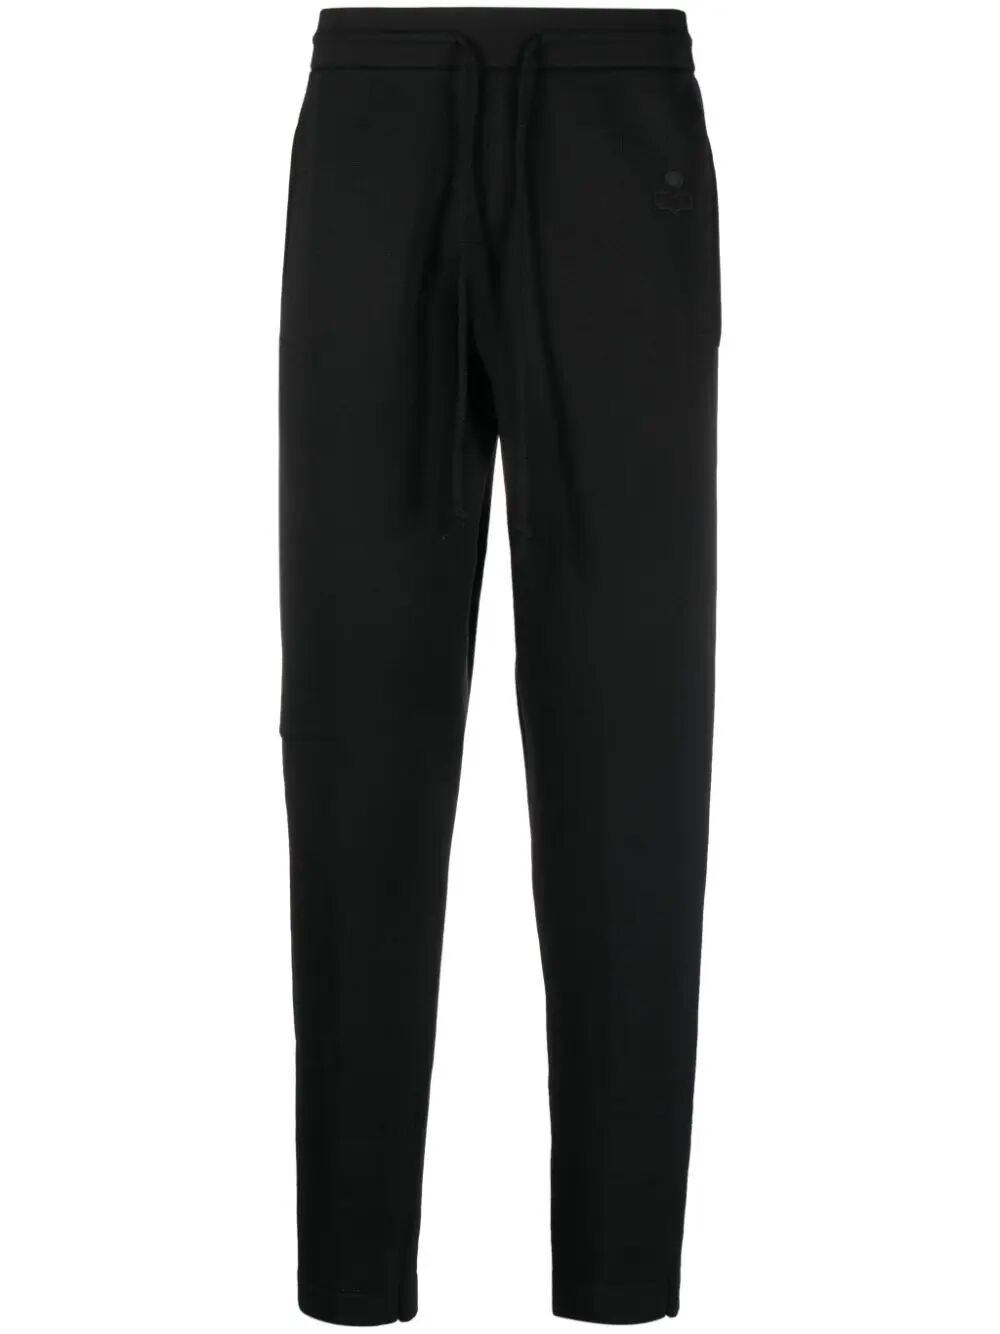 Marant Avery Pants In Black